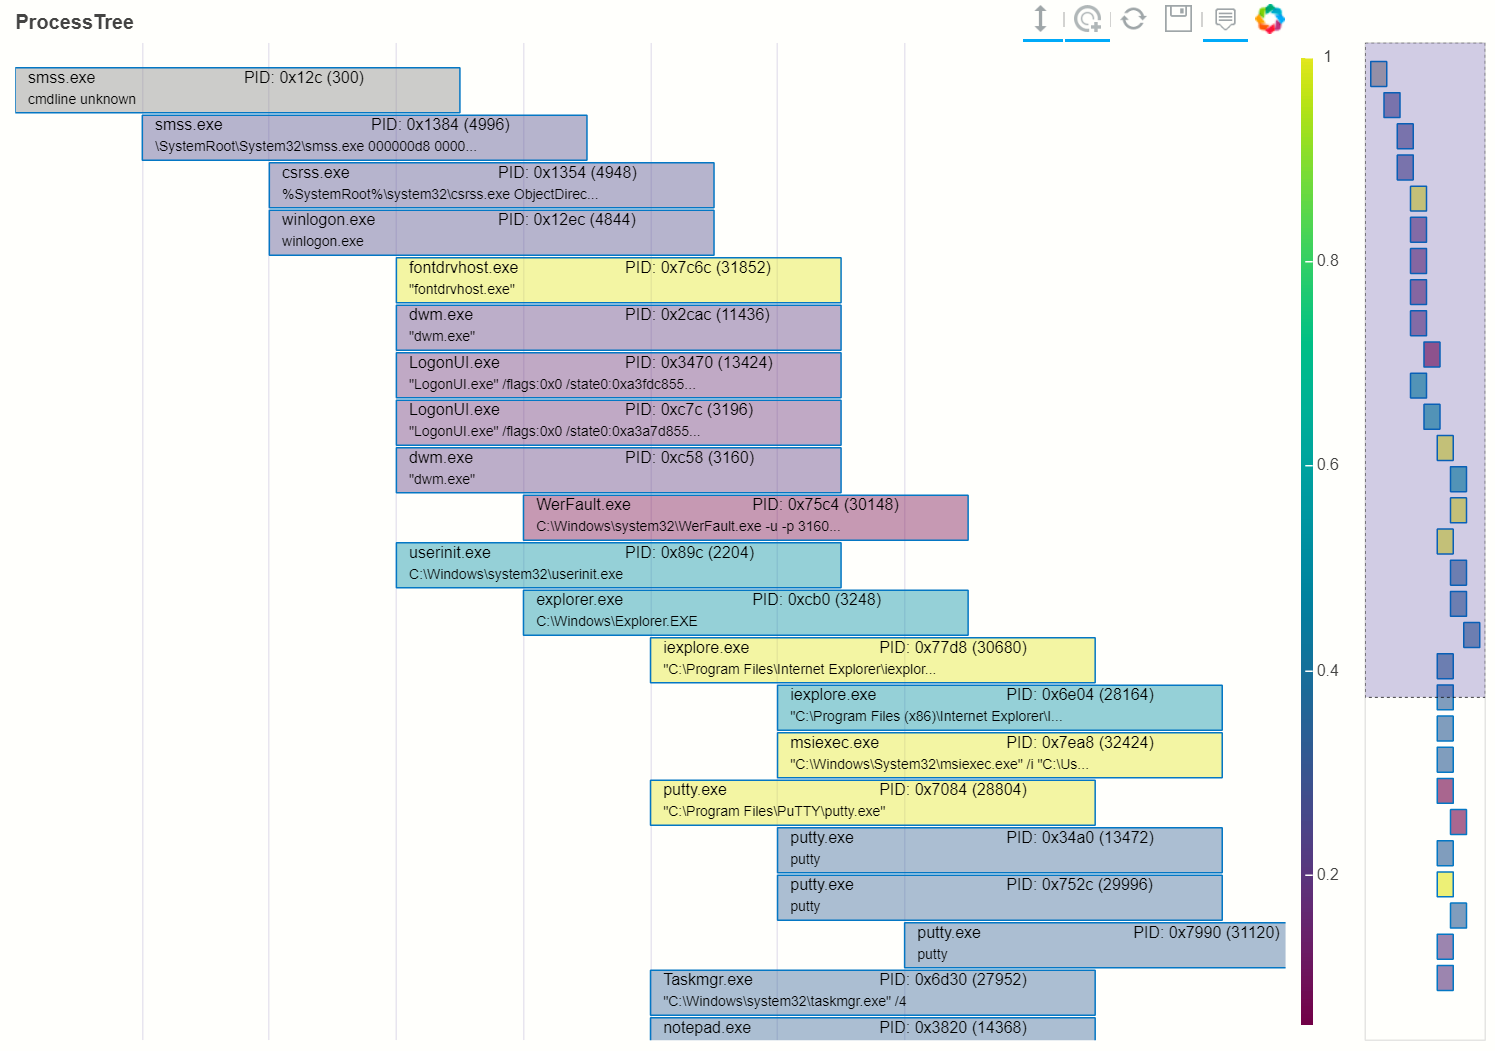 Process tree plot